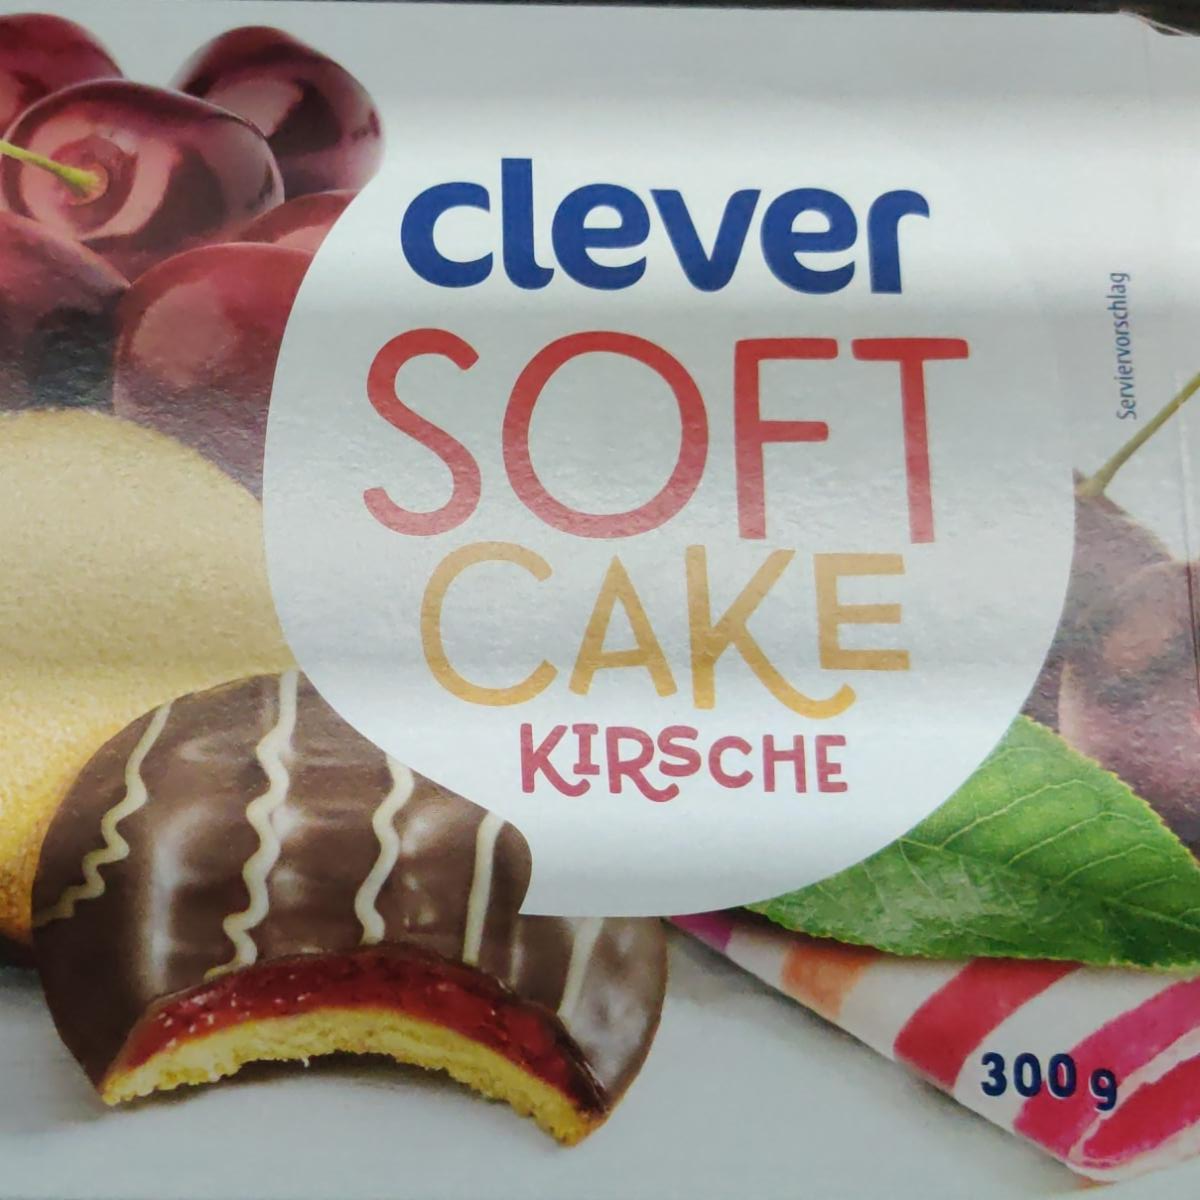 Fotografie - soft cake kirsche Clever